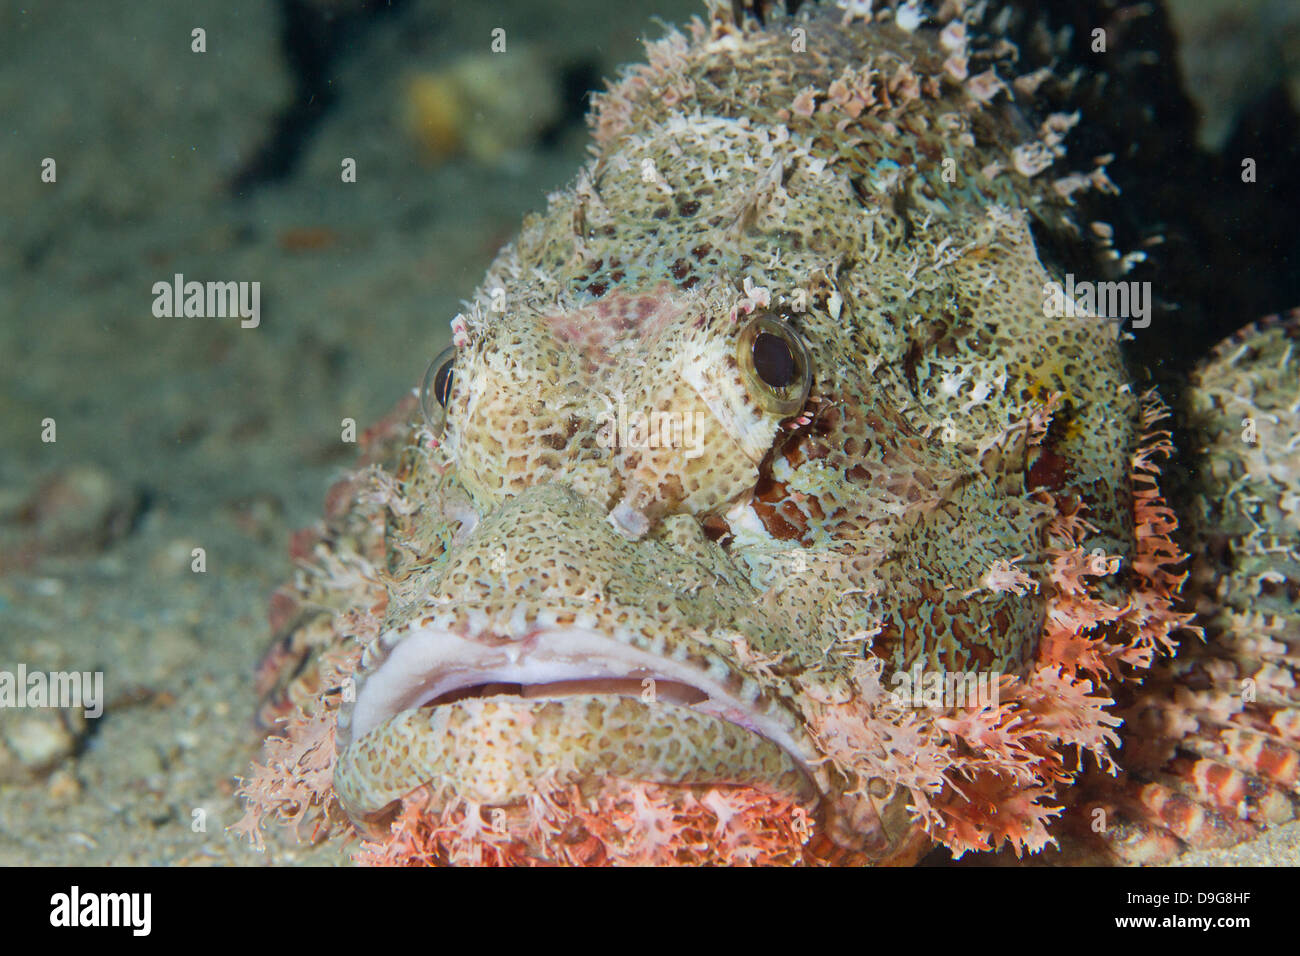 Tassled scorpionfish - Scorpaenopsis oxycephala, Mabul, Bornéo, Malaisie Banque D'Images